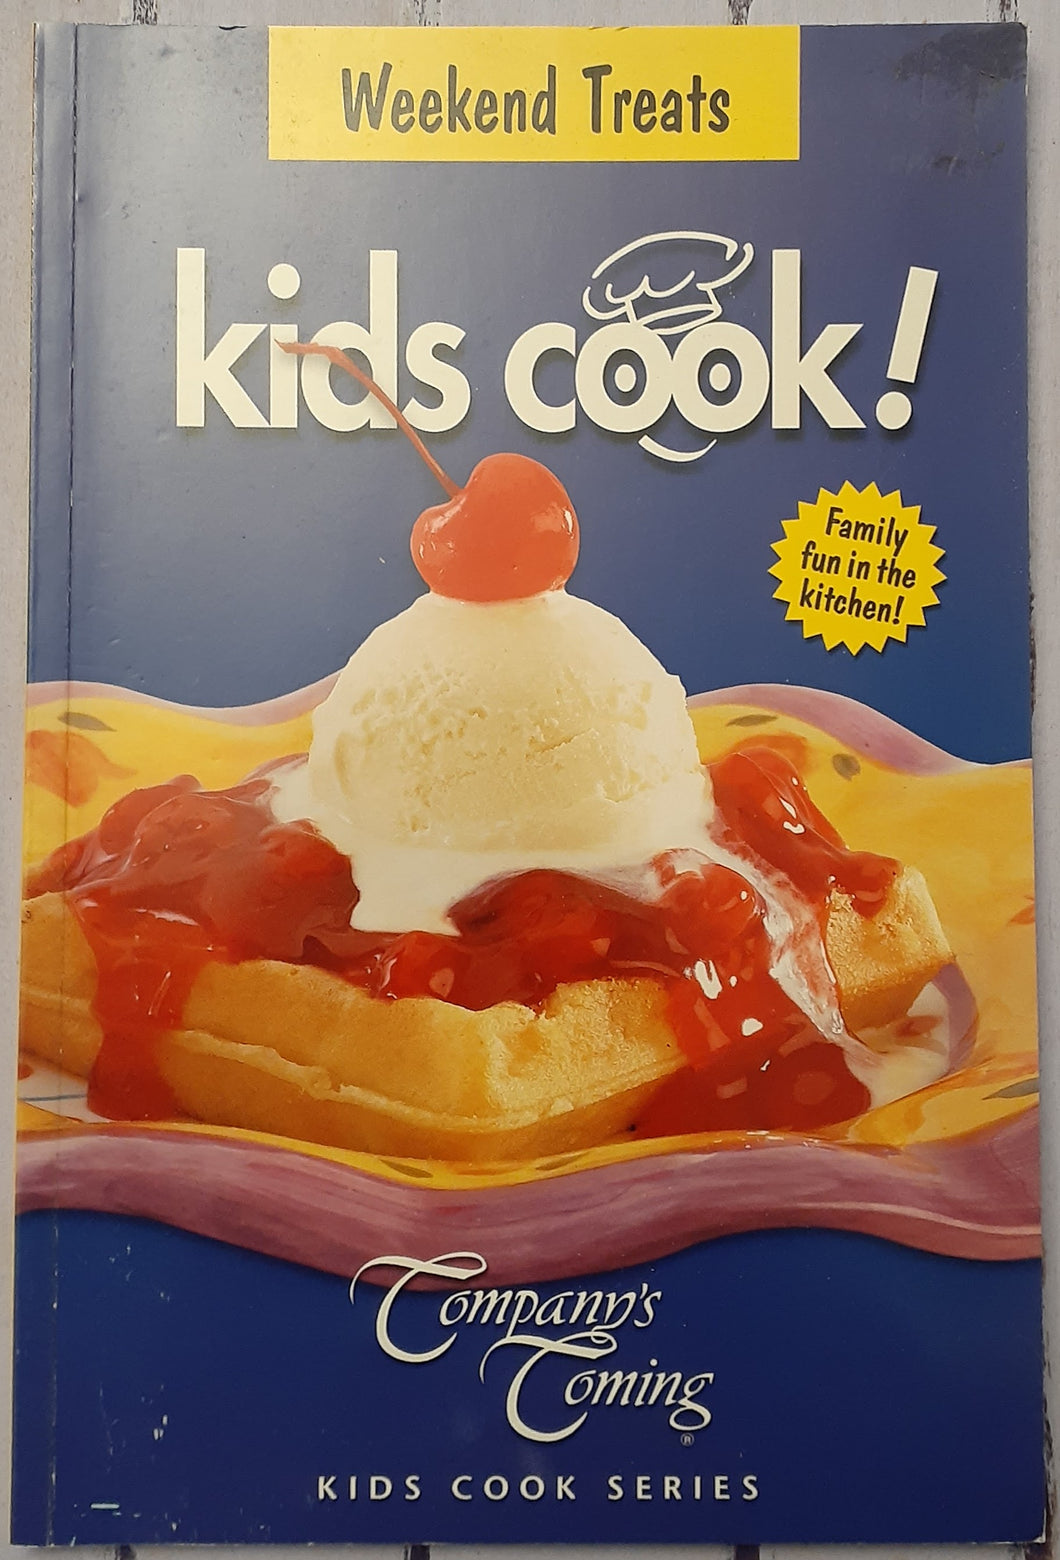 Weekend Treats - Kids Cook!